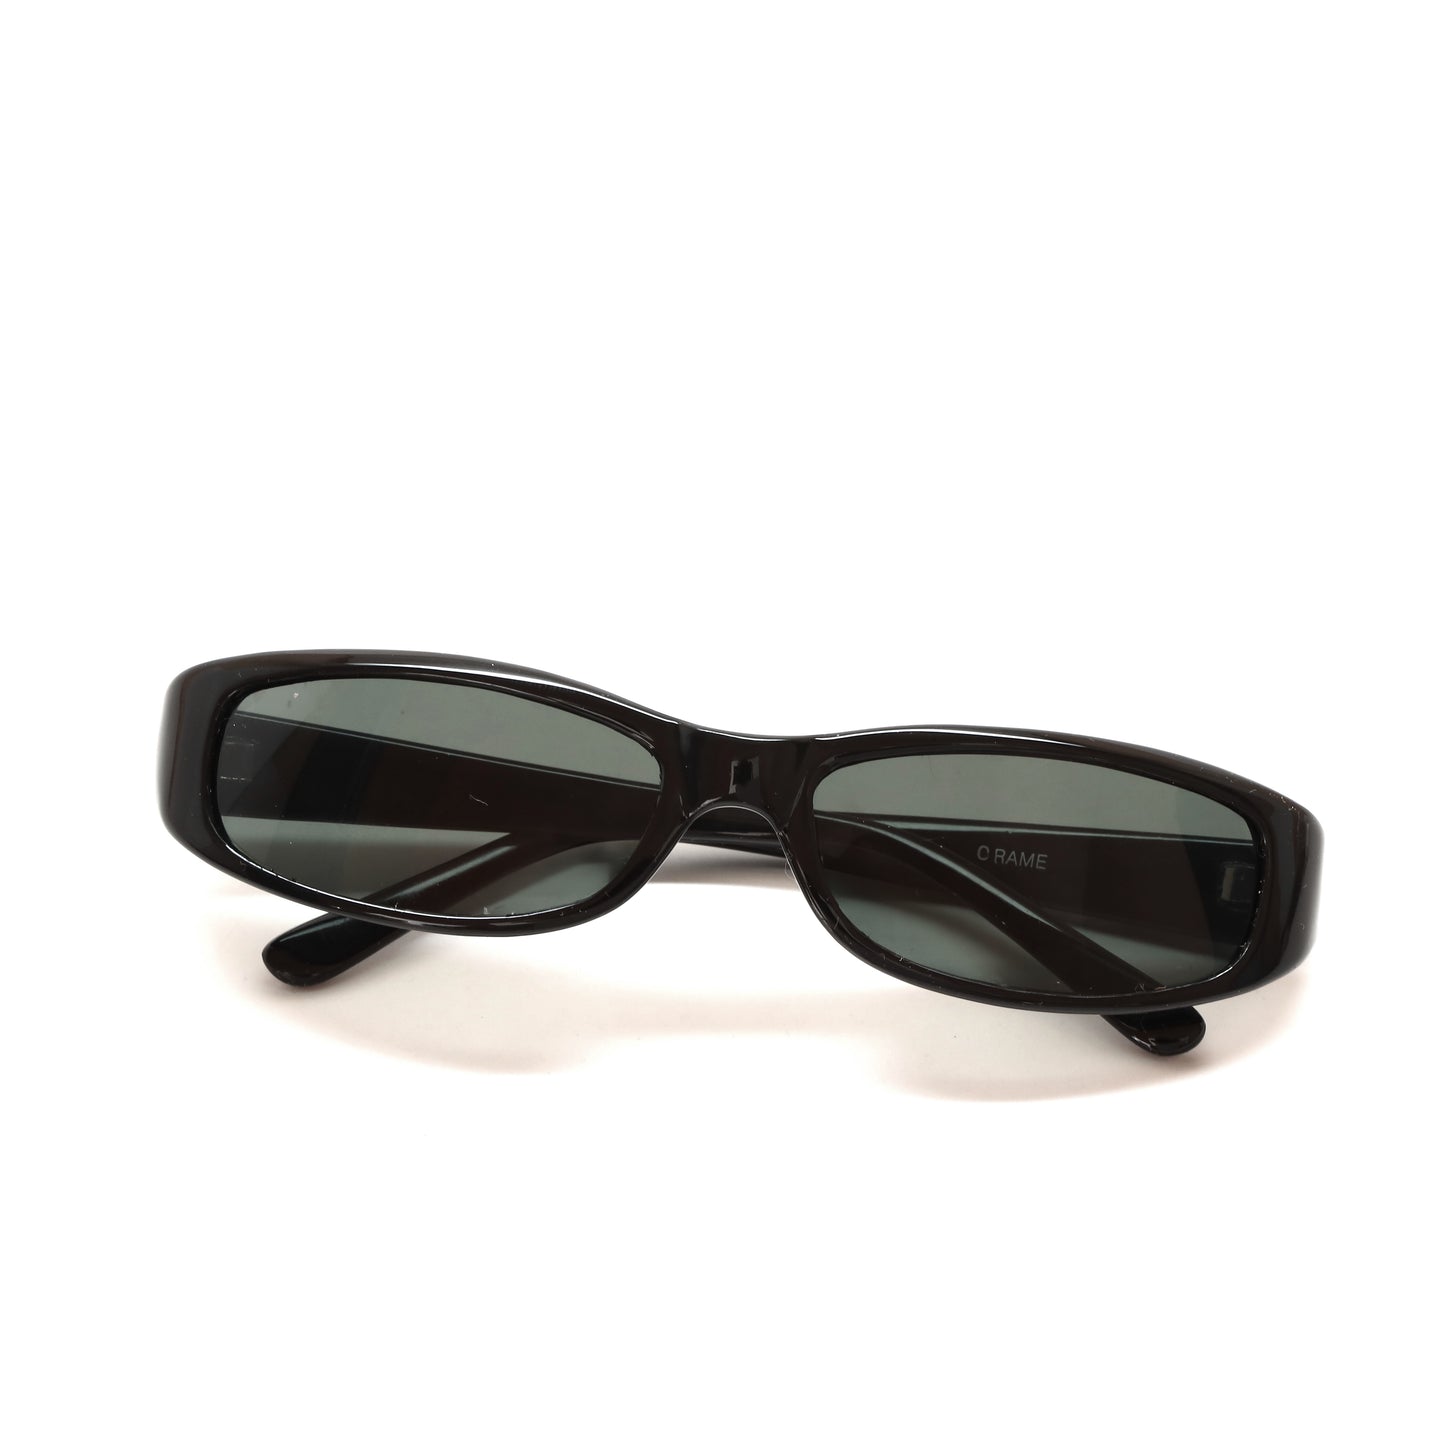 Vintage Small Size 90s Dez Narrow Shaped Sunglasses - Black